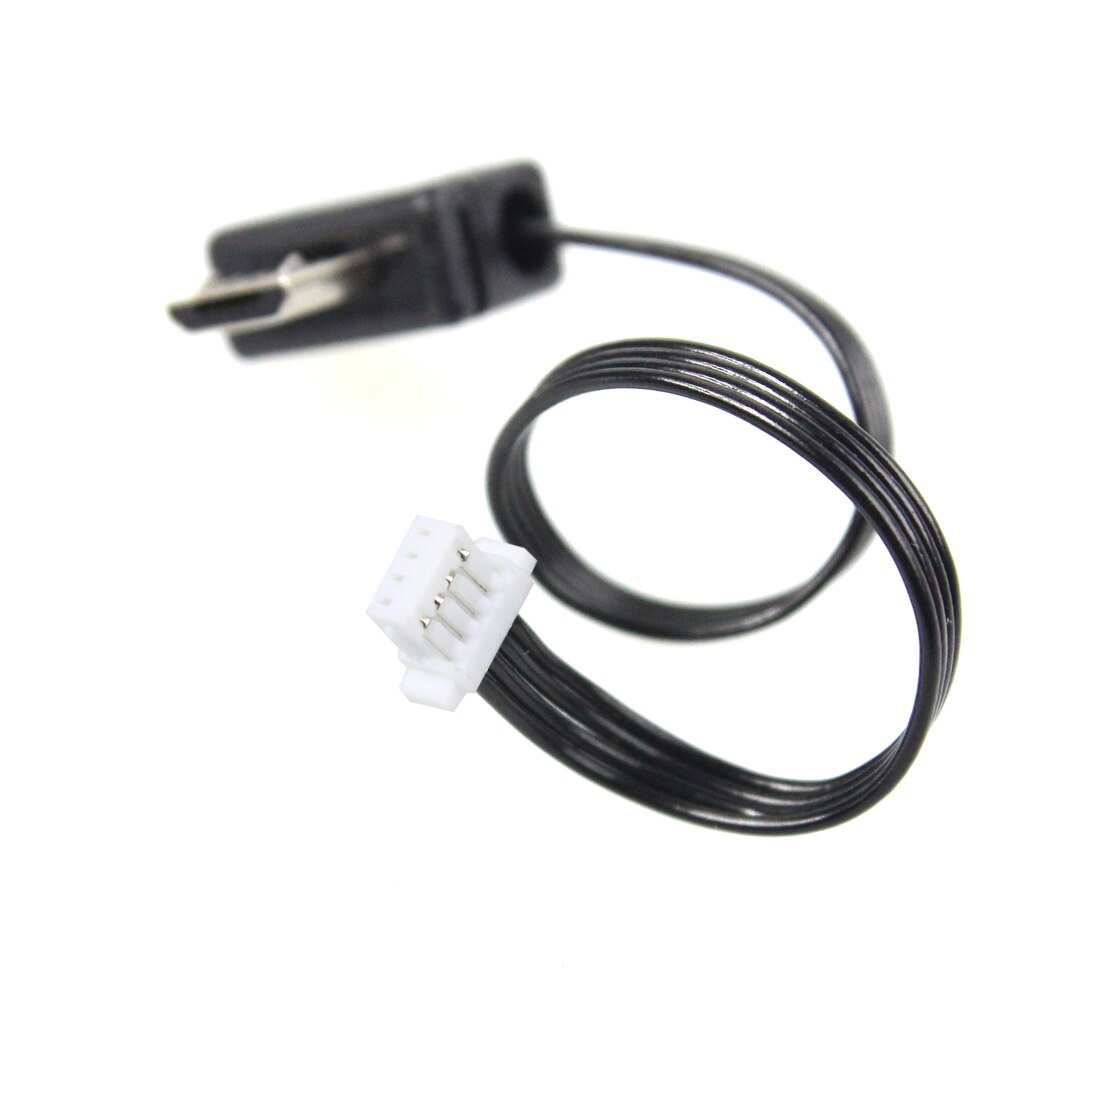 Кабель подключения Zhiyun GoPro Charge Cable (Mini USB) AV 90mm (B000102) кабель подключения zhiyun gopro charge cable mini usb av 90mm b000102